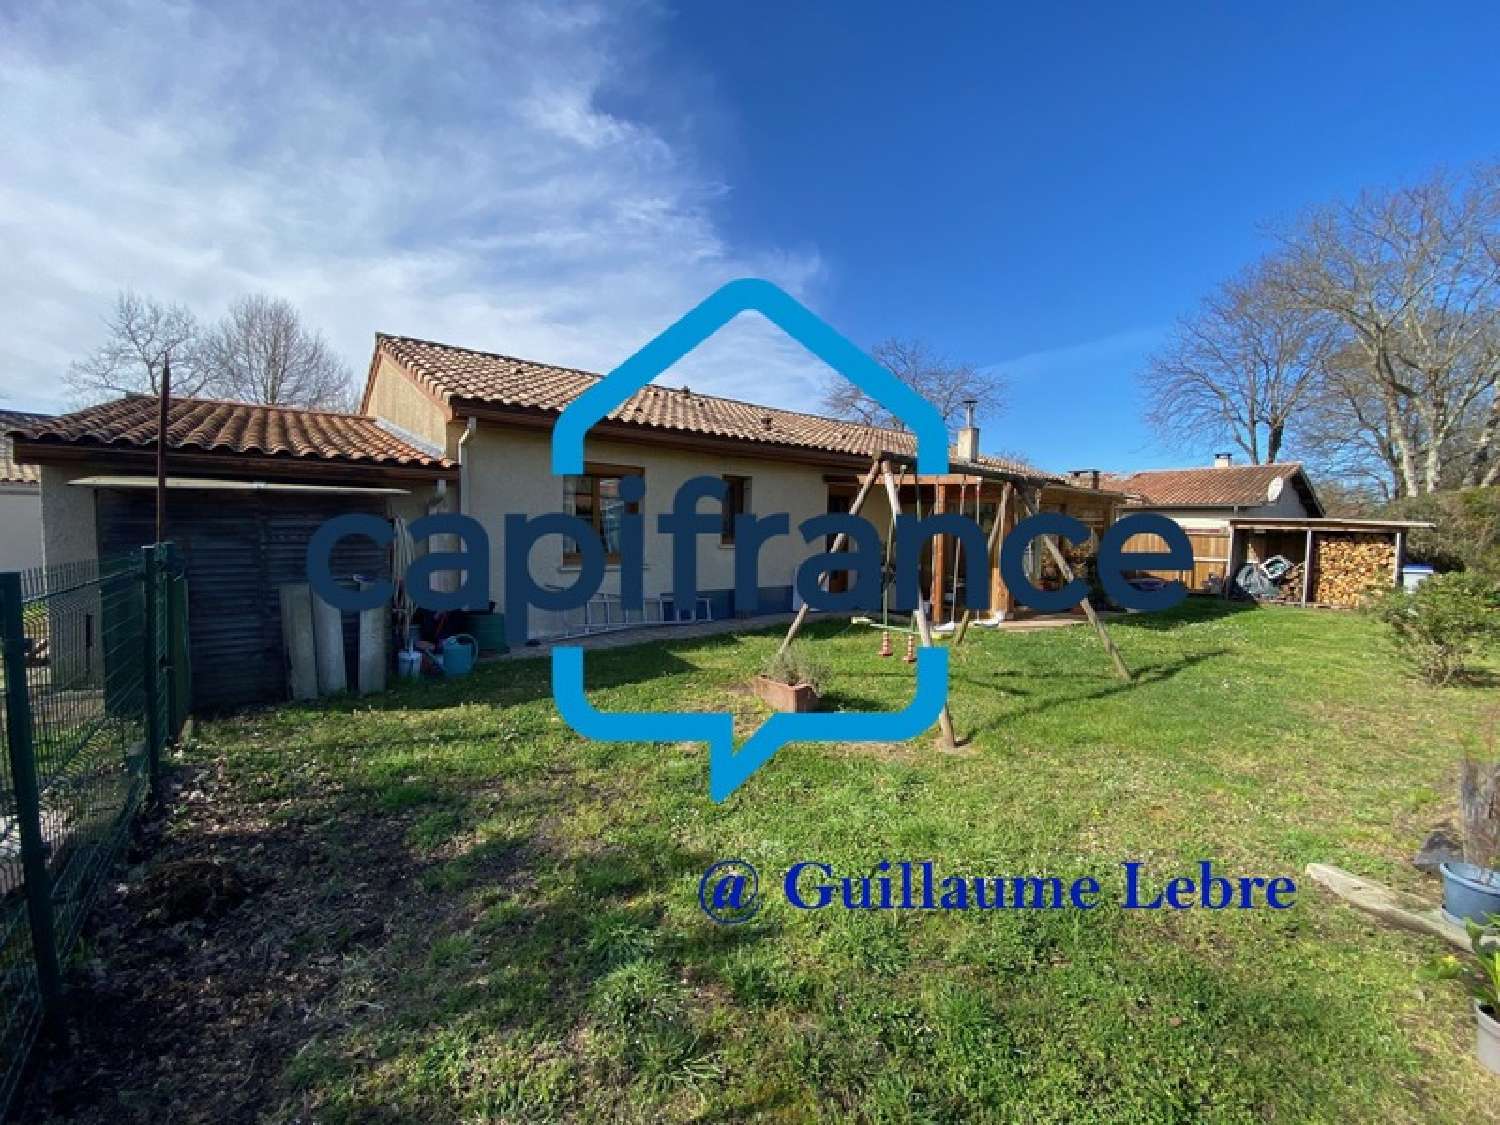  à vendre maison Lacanau Gironde 4